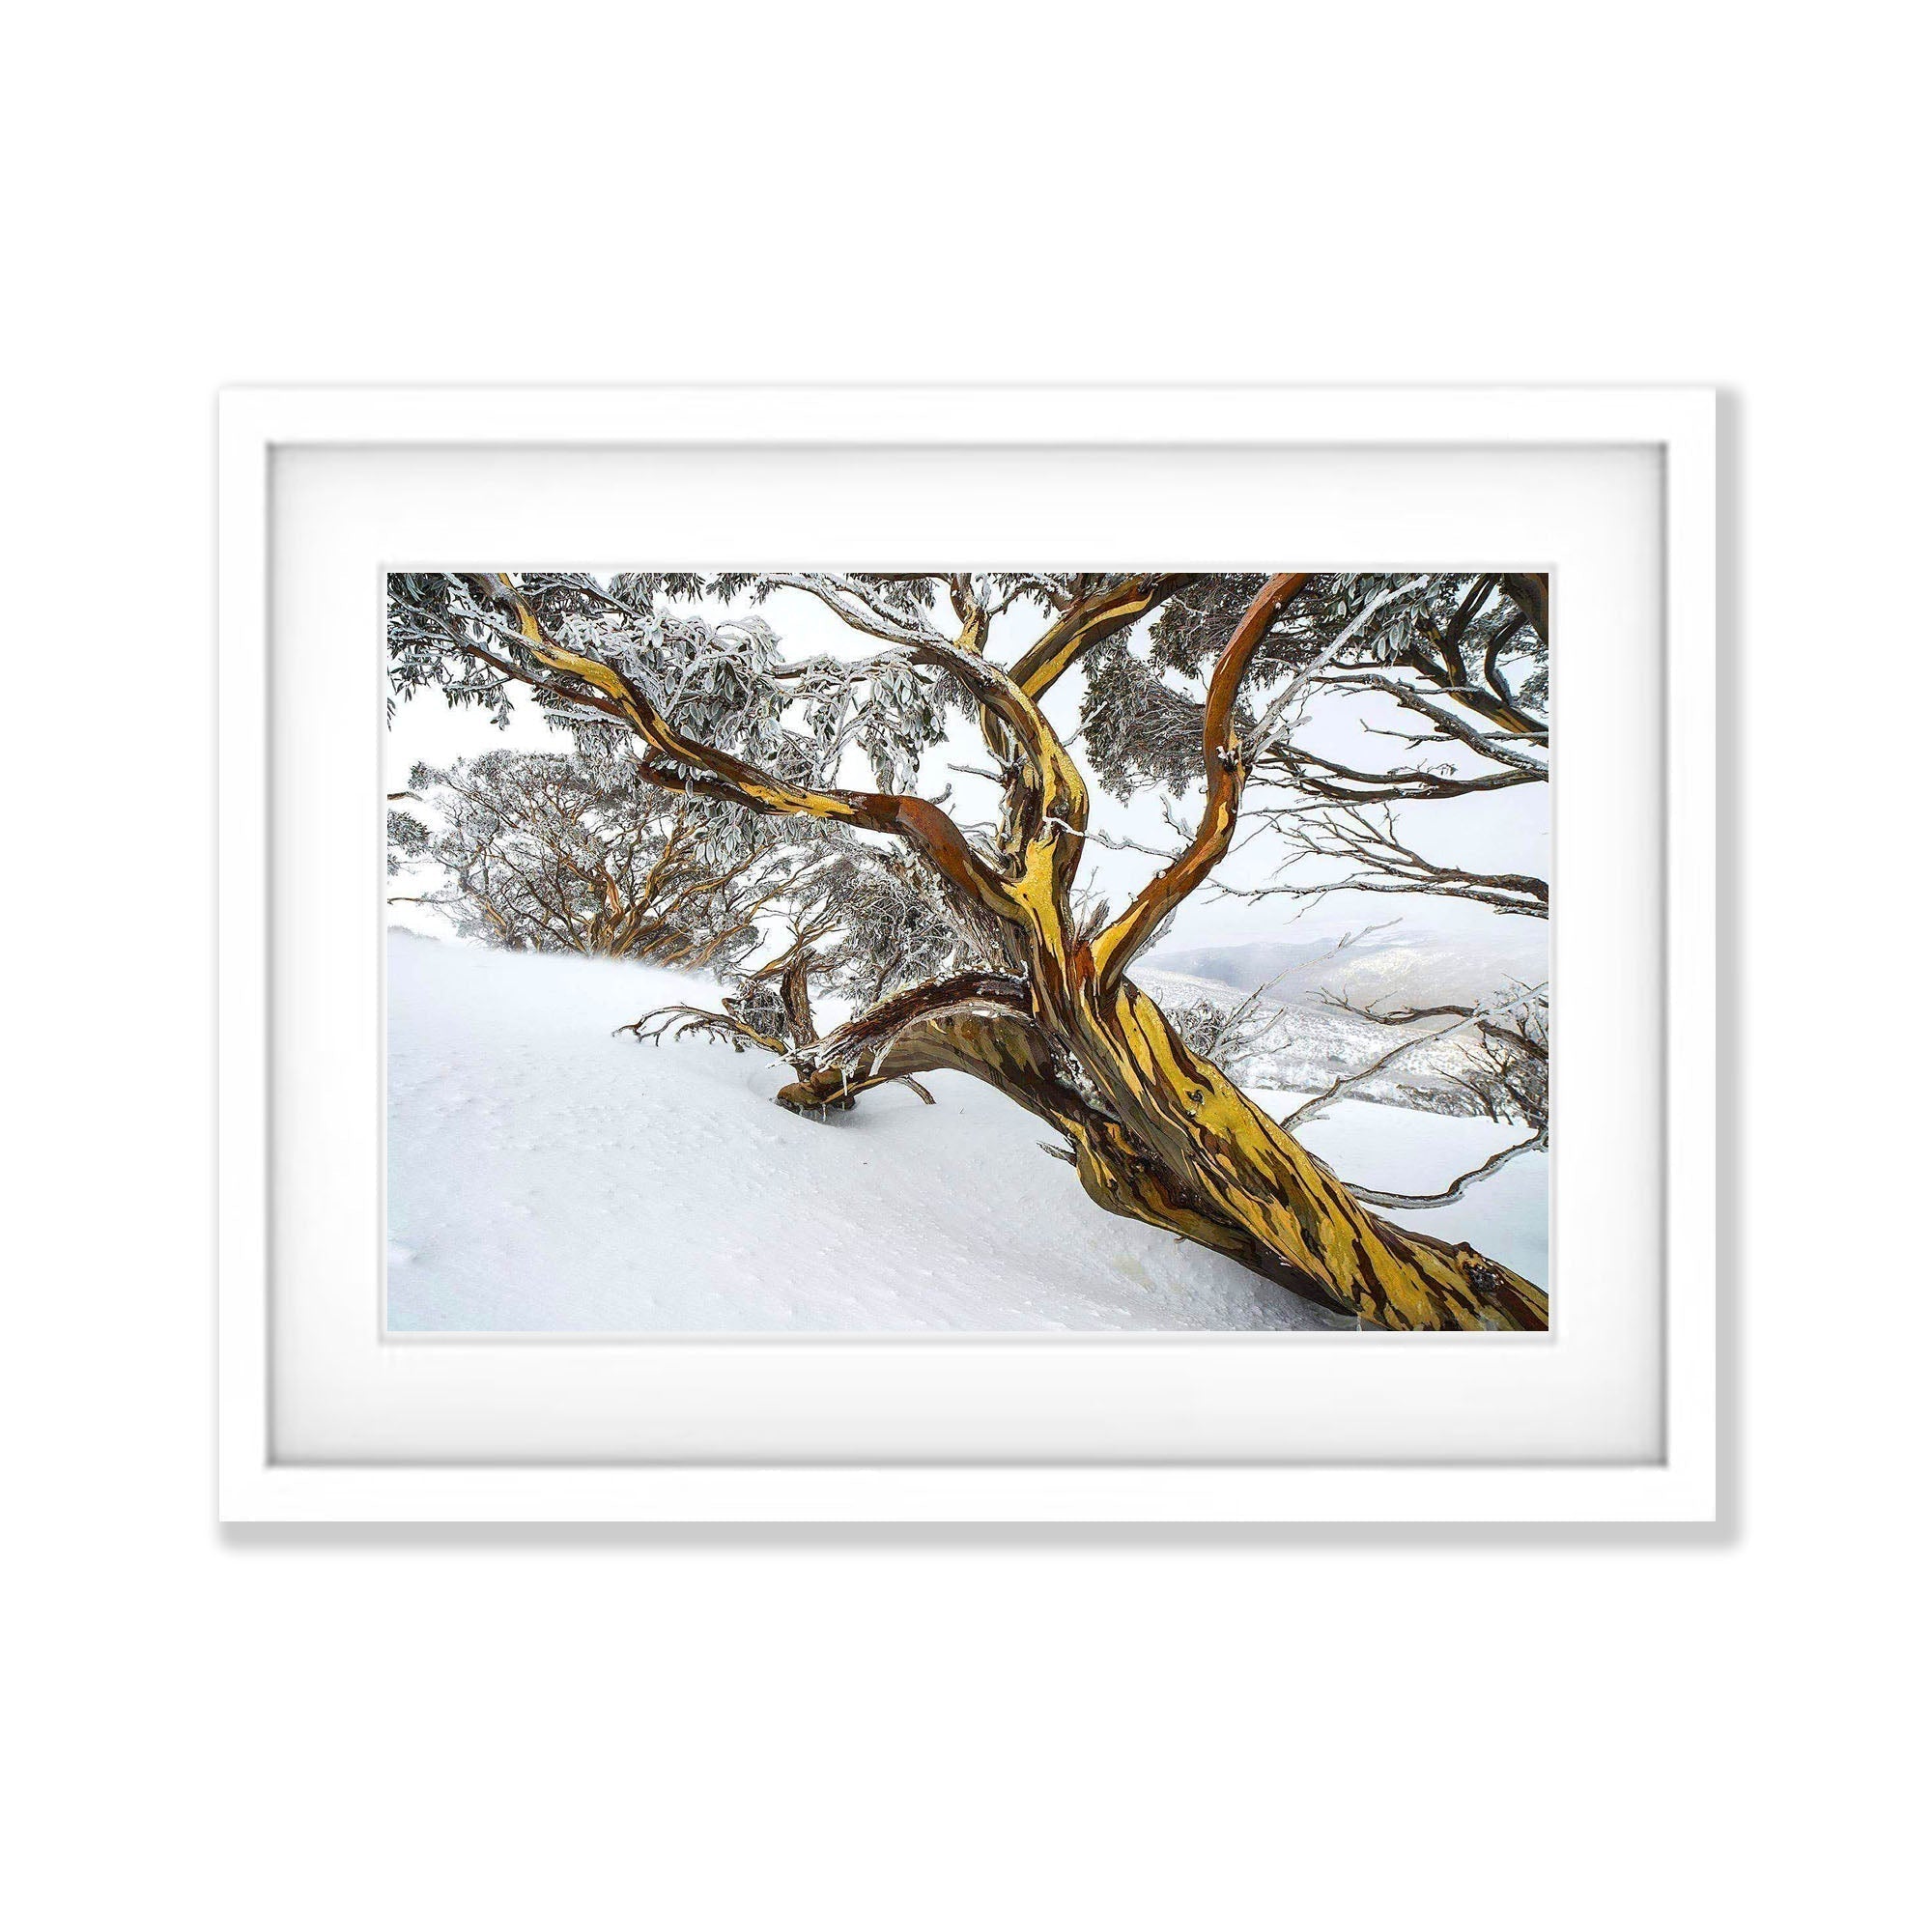 ARTWORK INSTOCK - Snow Gum, Dead Horse Gap, Snowy Mountains NSW - 150 x 100cms Canvas Raw Oak Print